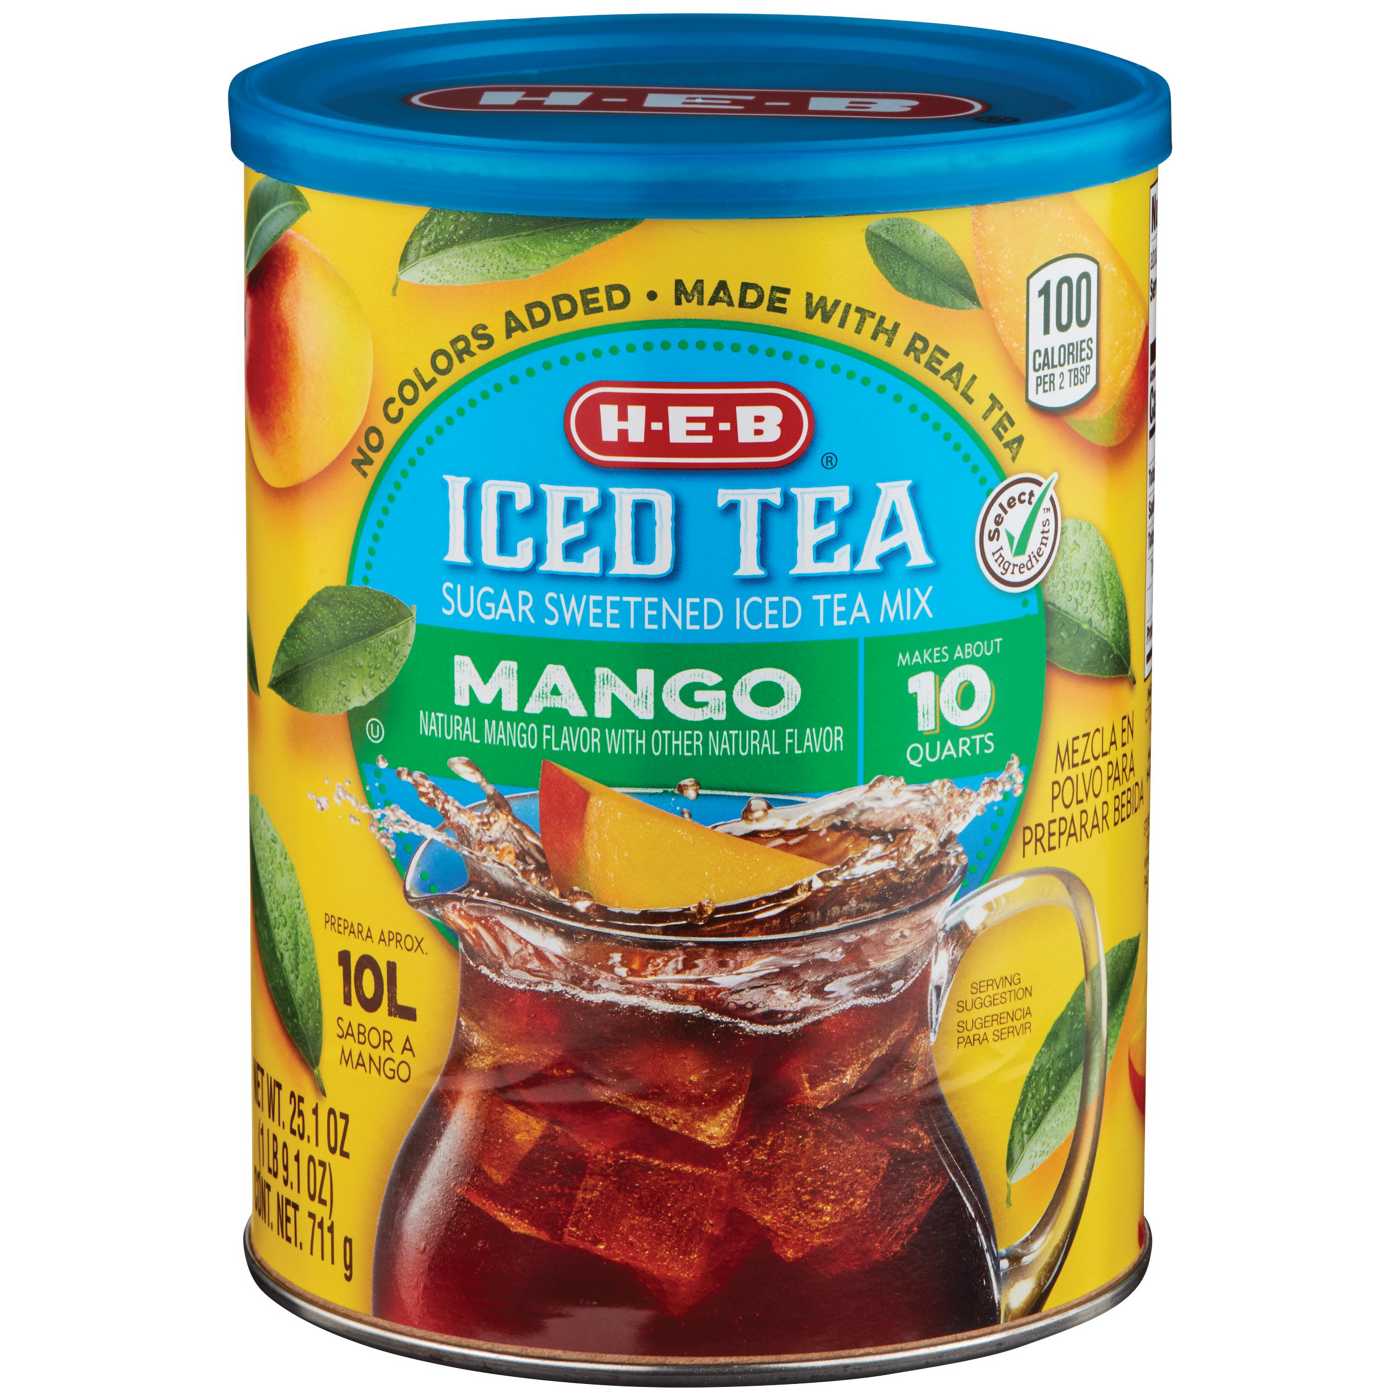 H-E-B Mango Sugar Sweetened Iced Tea Mix; image 1 of 2